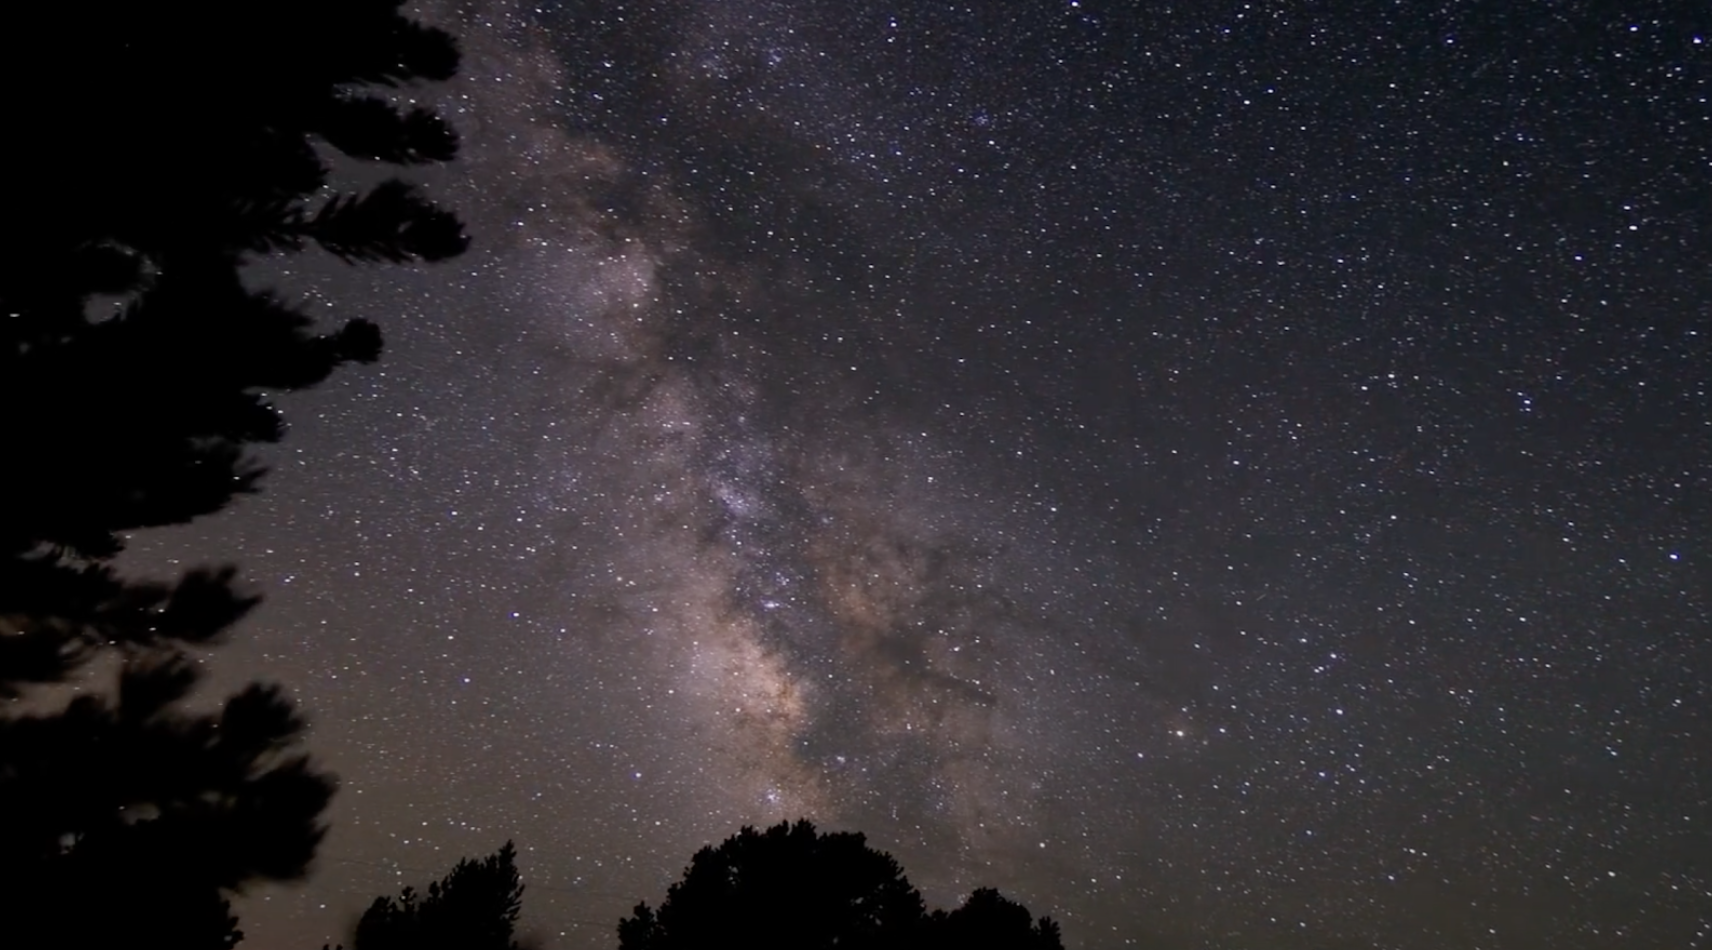 Night sky photo showing the Milky Way galaxy.